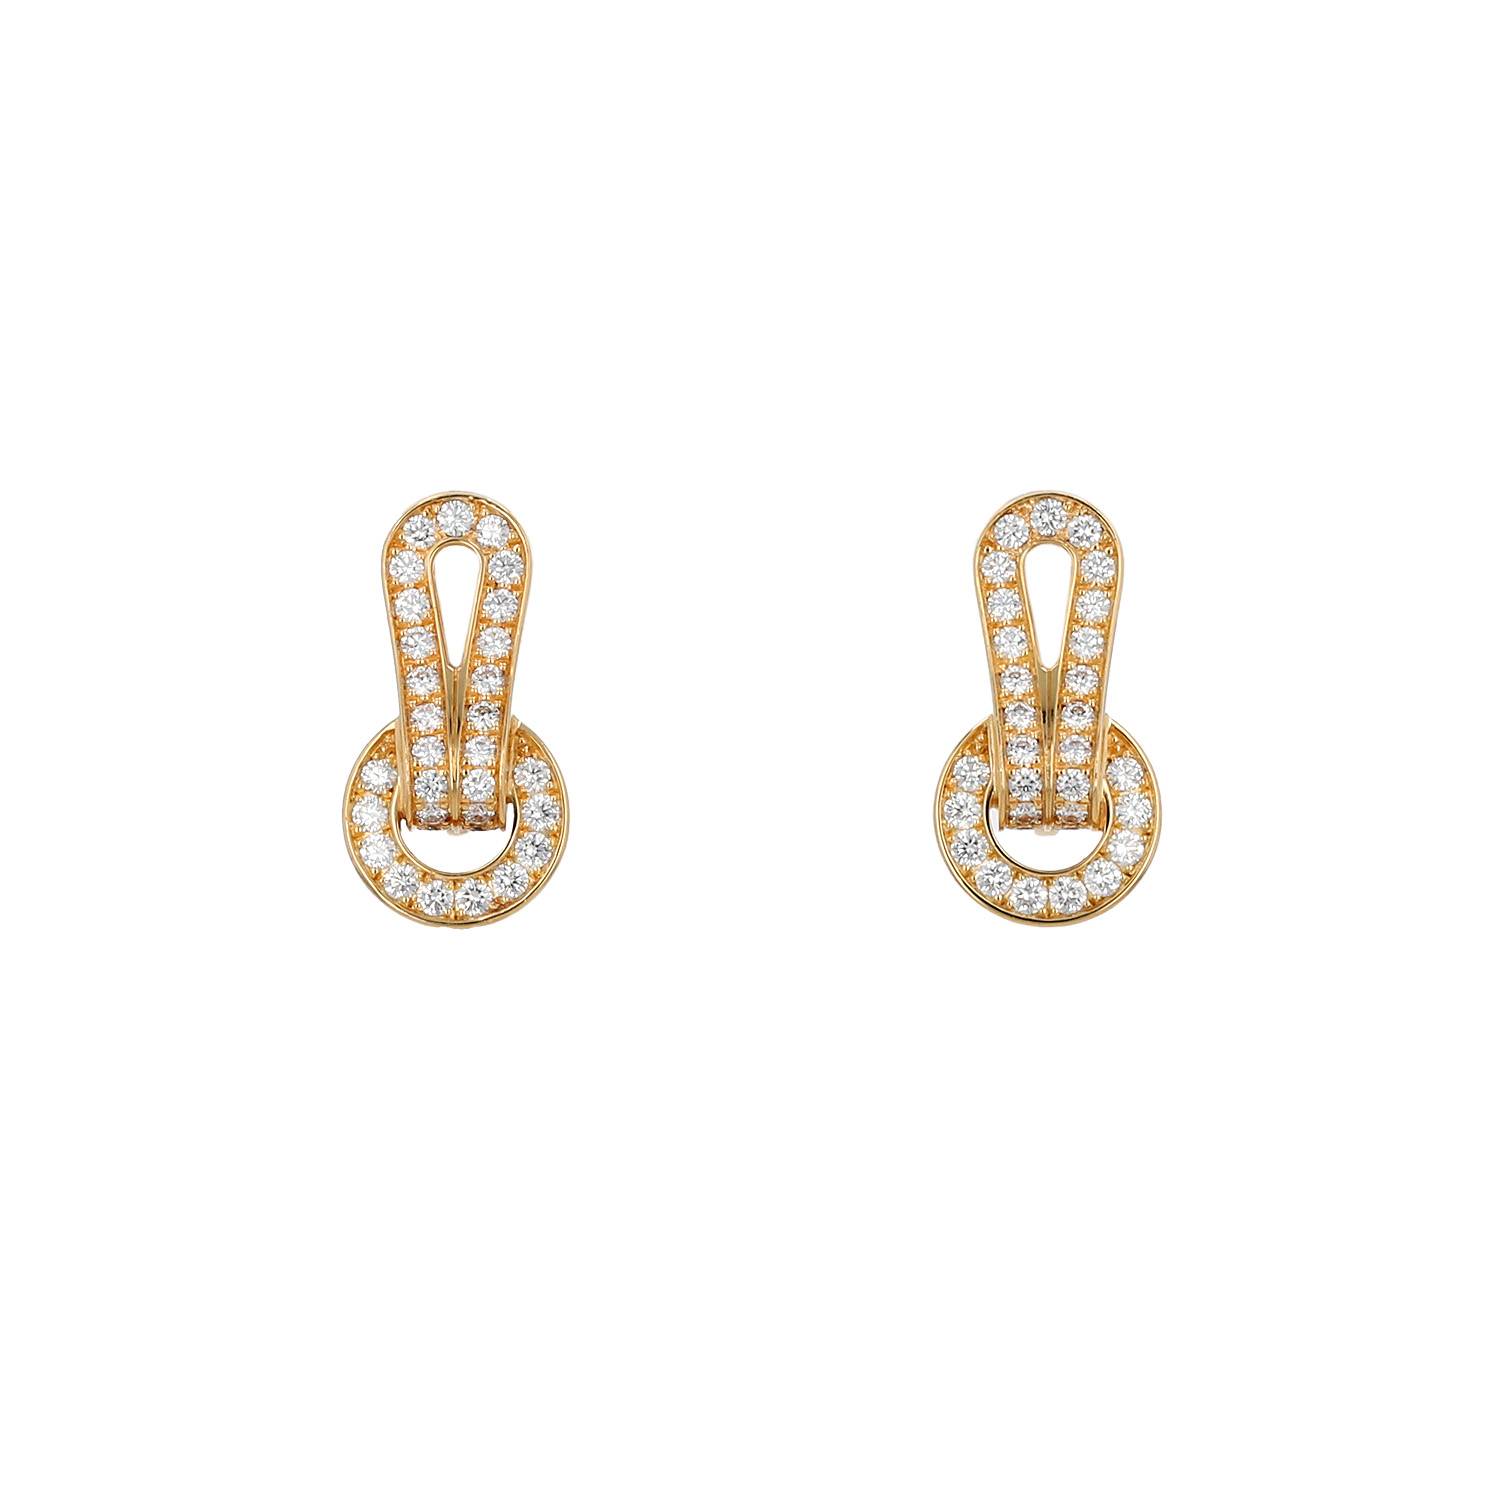 Agrafe Earrings In Yellow And Diamonds